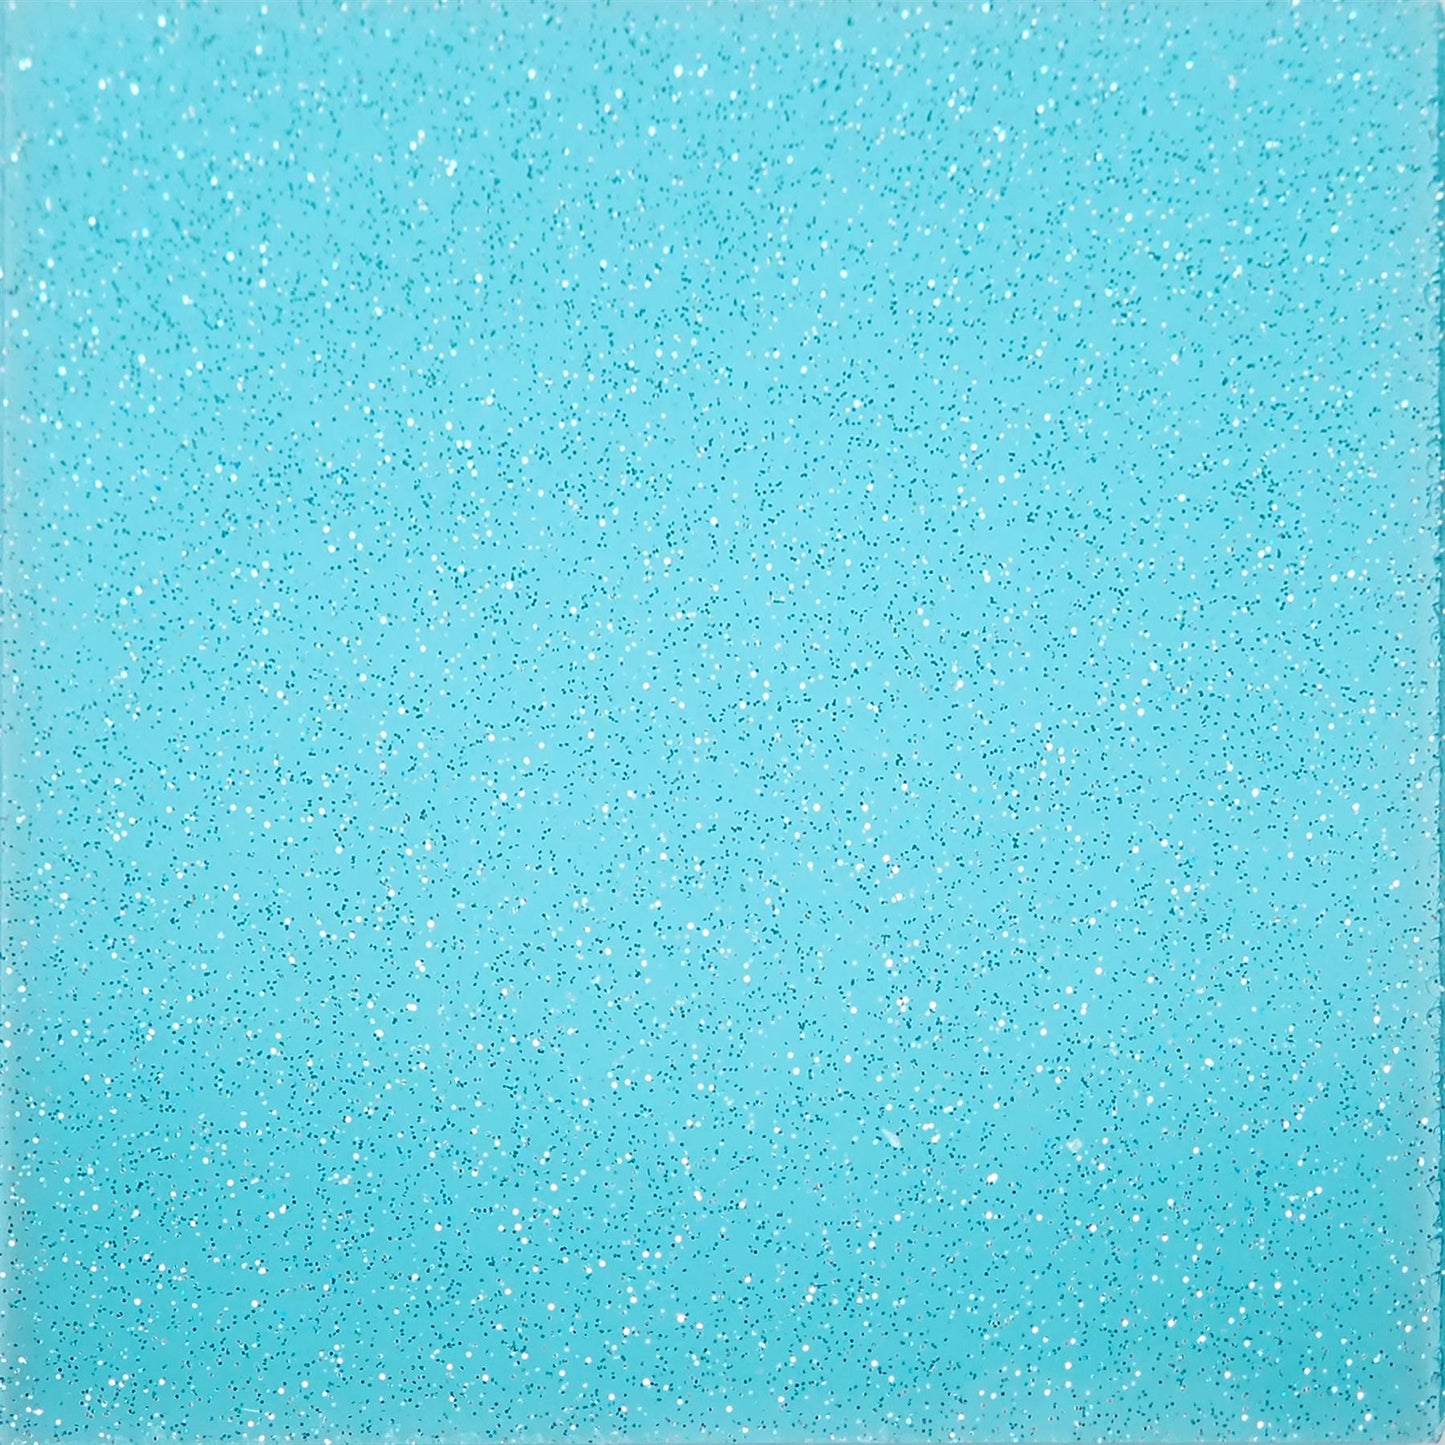 Incudo Blue Transparent Glitter Acrylic Sheet - 300x250x3mm